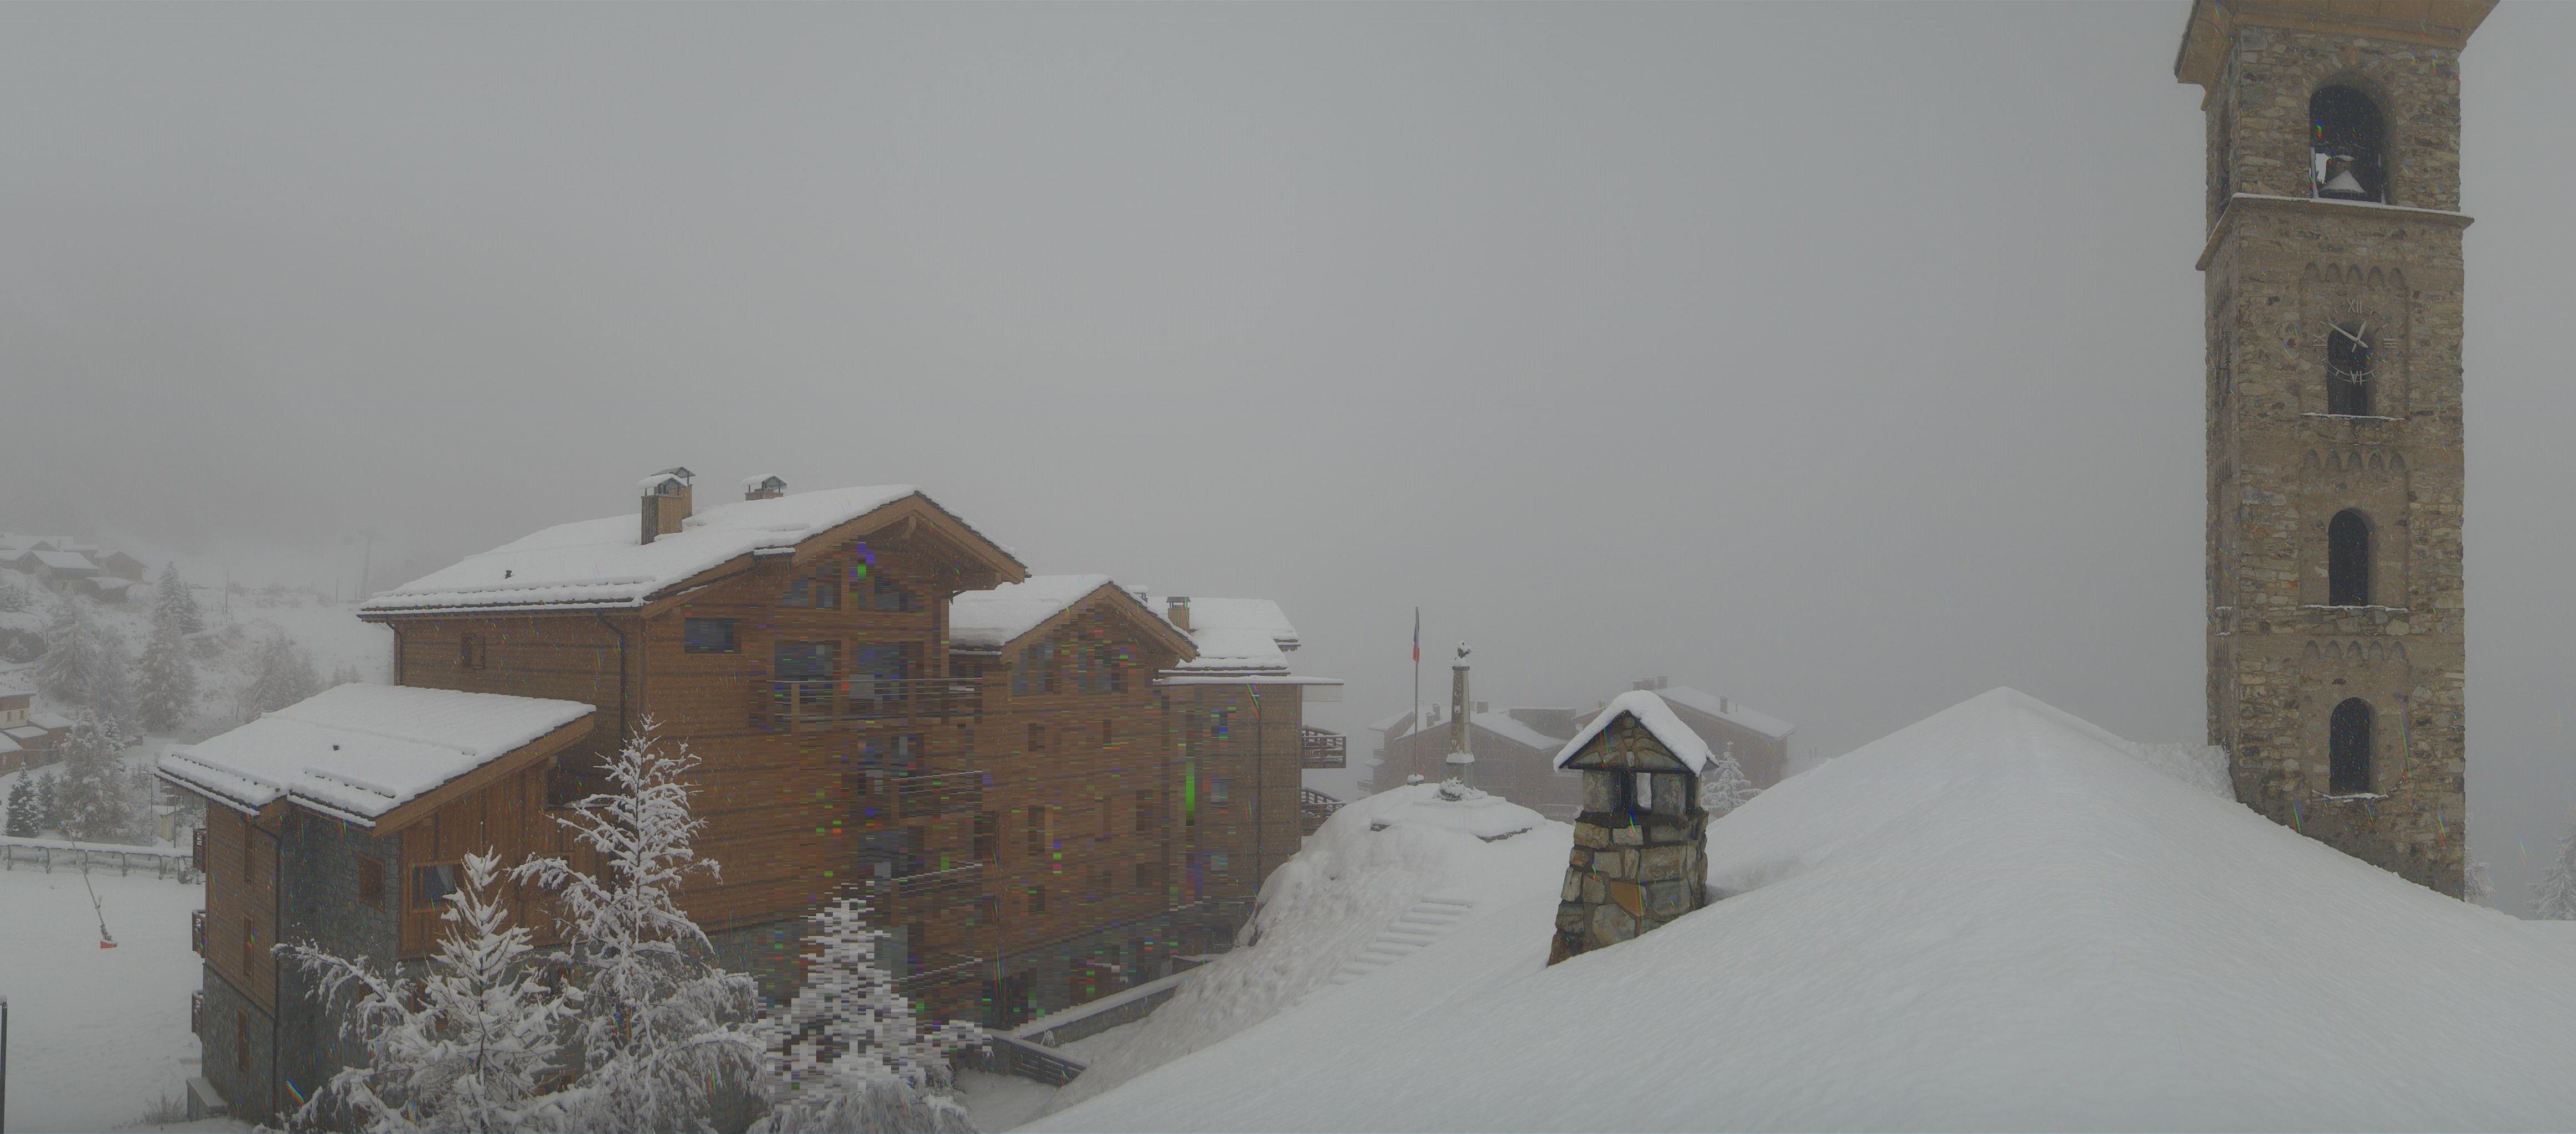 In Tignes Les Boisses, it is snowing at 1800 metres (roundshot.com)